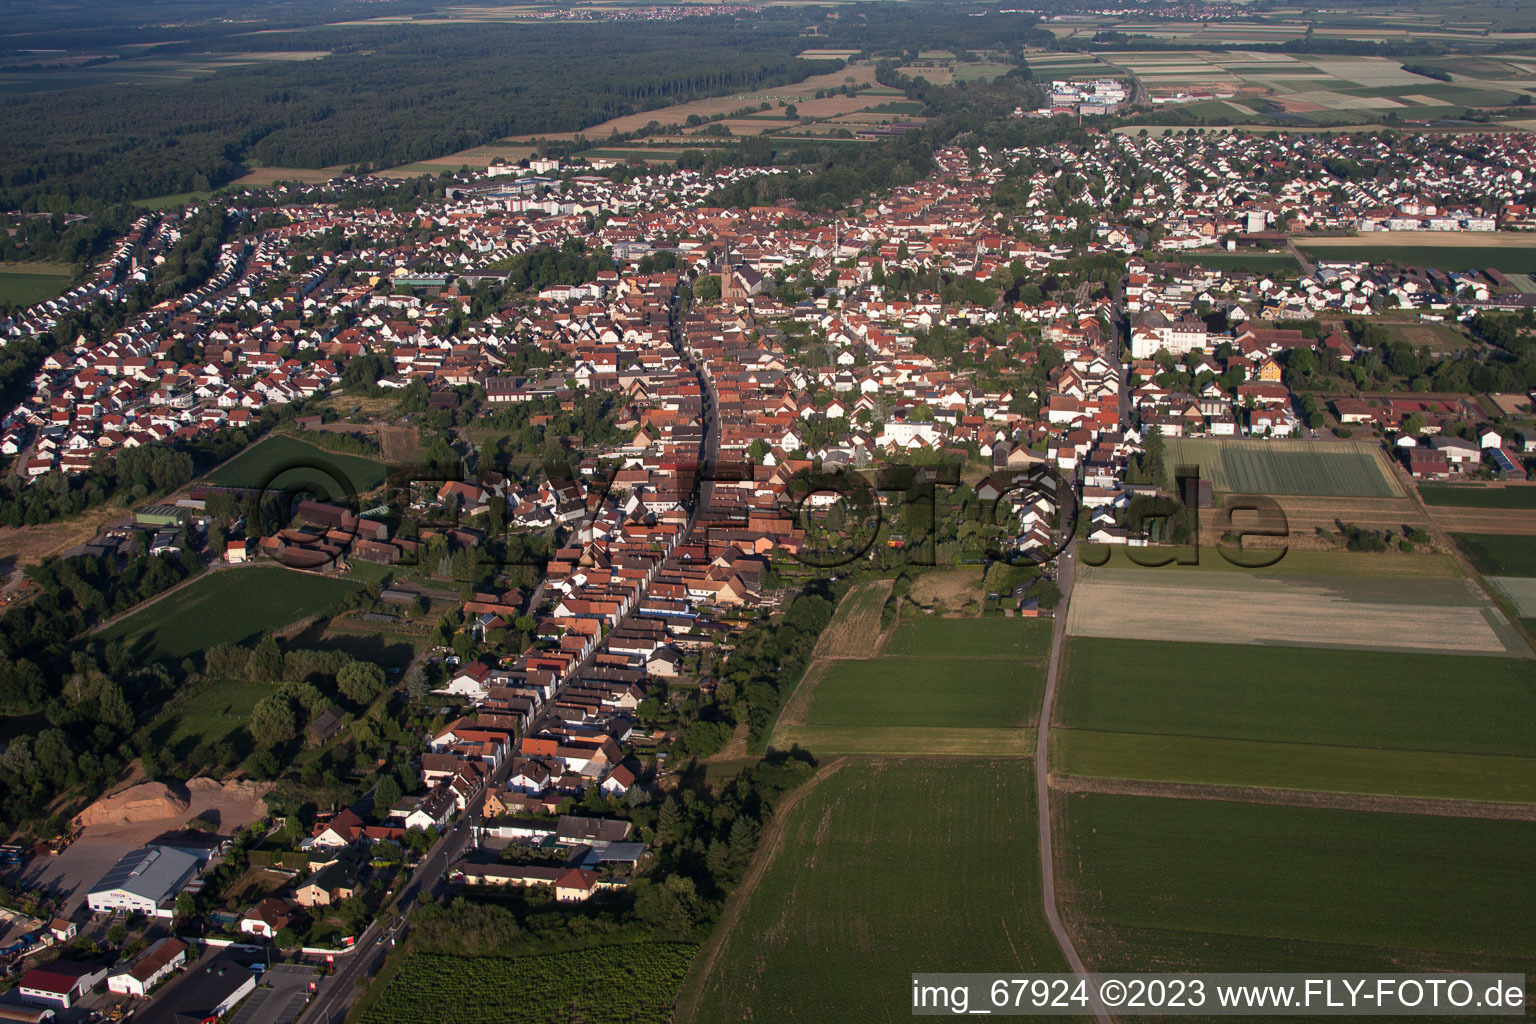 District Herxheim in Herxheim bei Landau/Pfalz in the state Rhineland-Palatinate, Germany seen from above